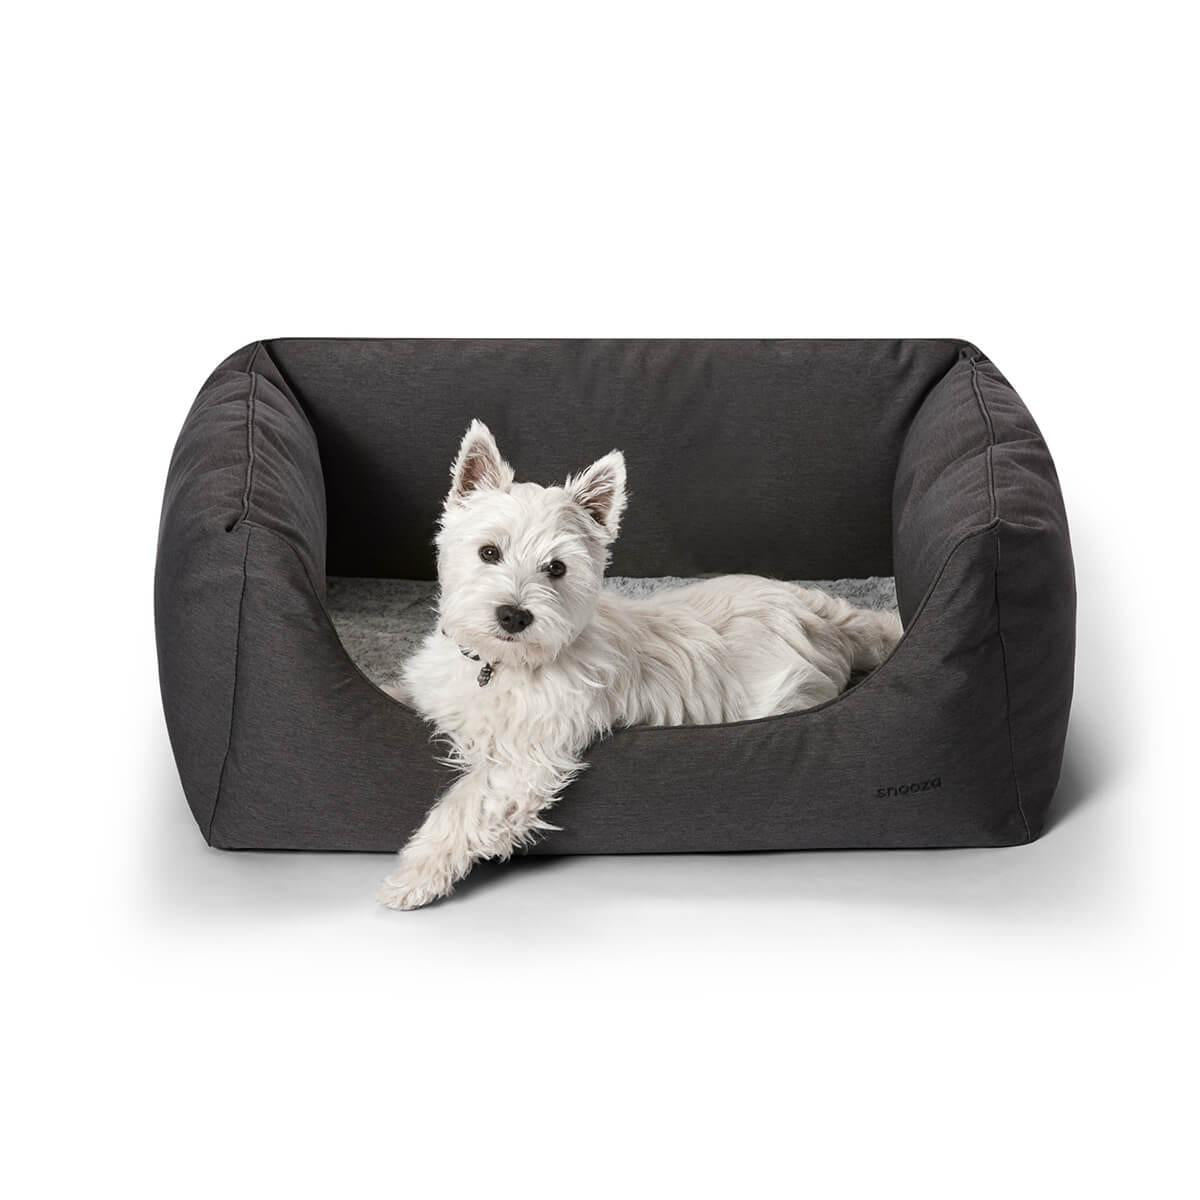 SNOOZA Ortho Nestler Charcoal Dog Bed